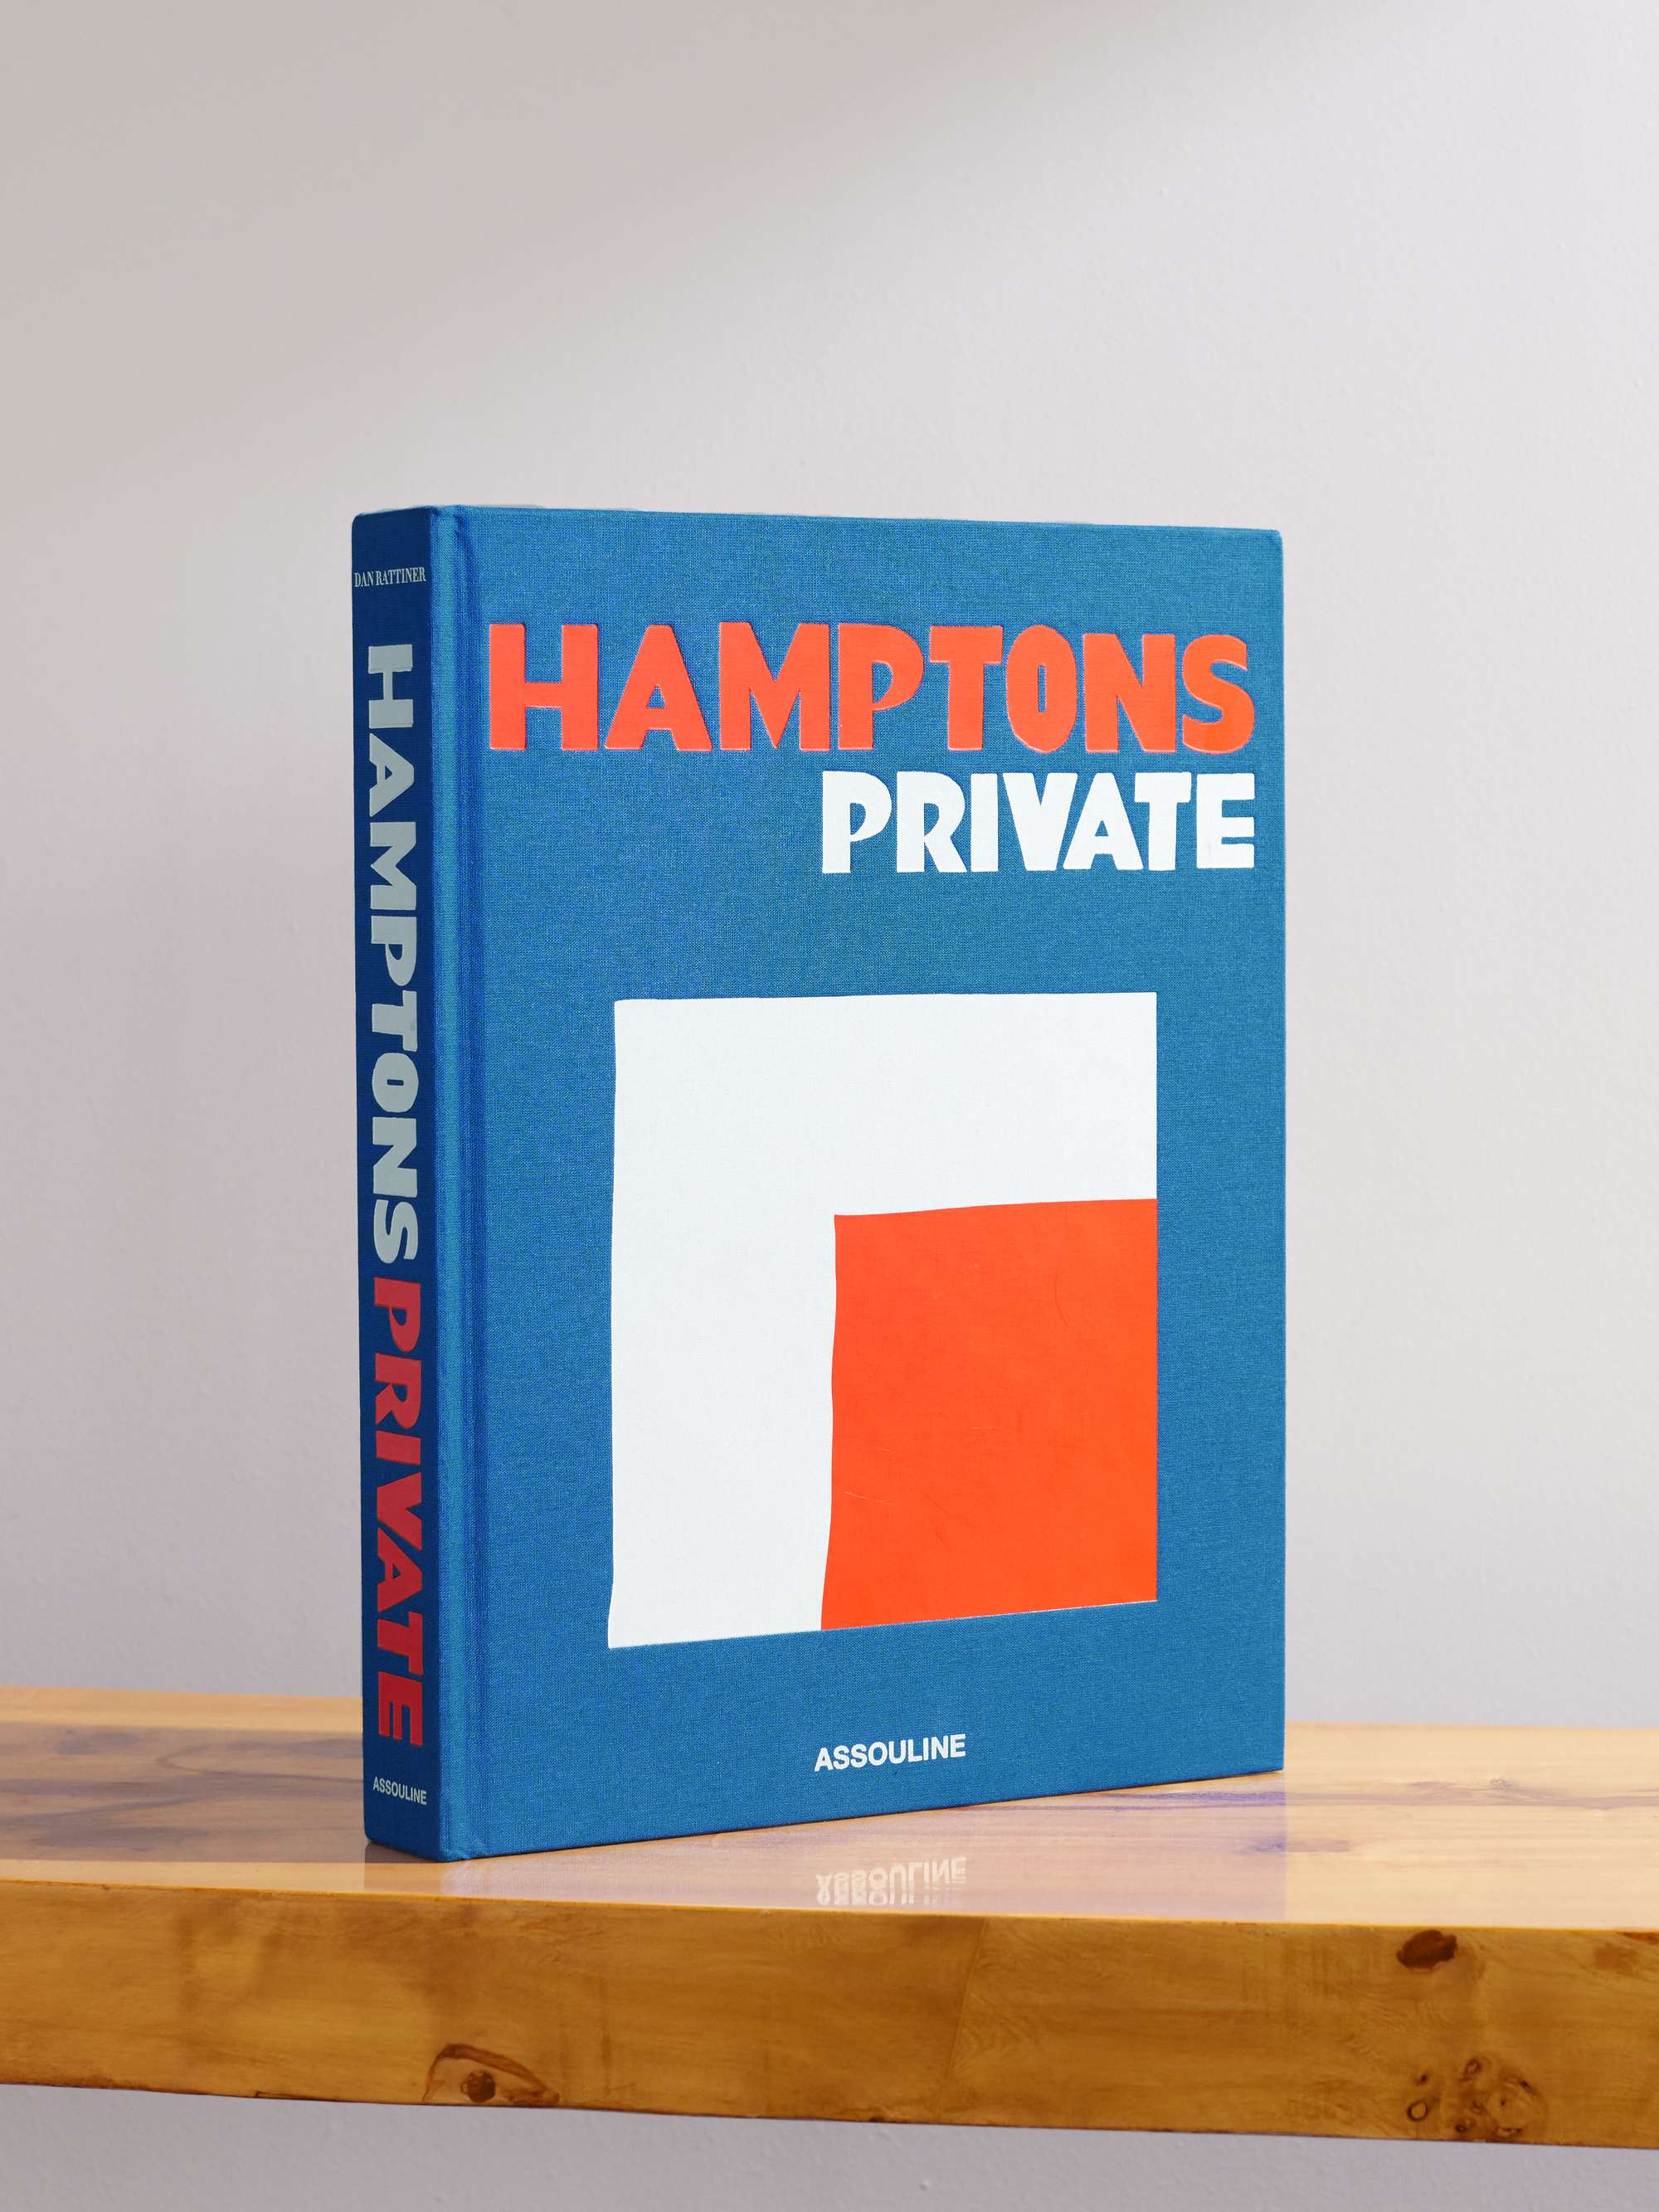 ASSOULINE Hamptons Private Hardcover Book